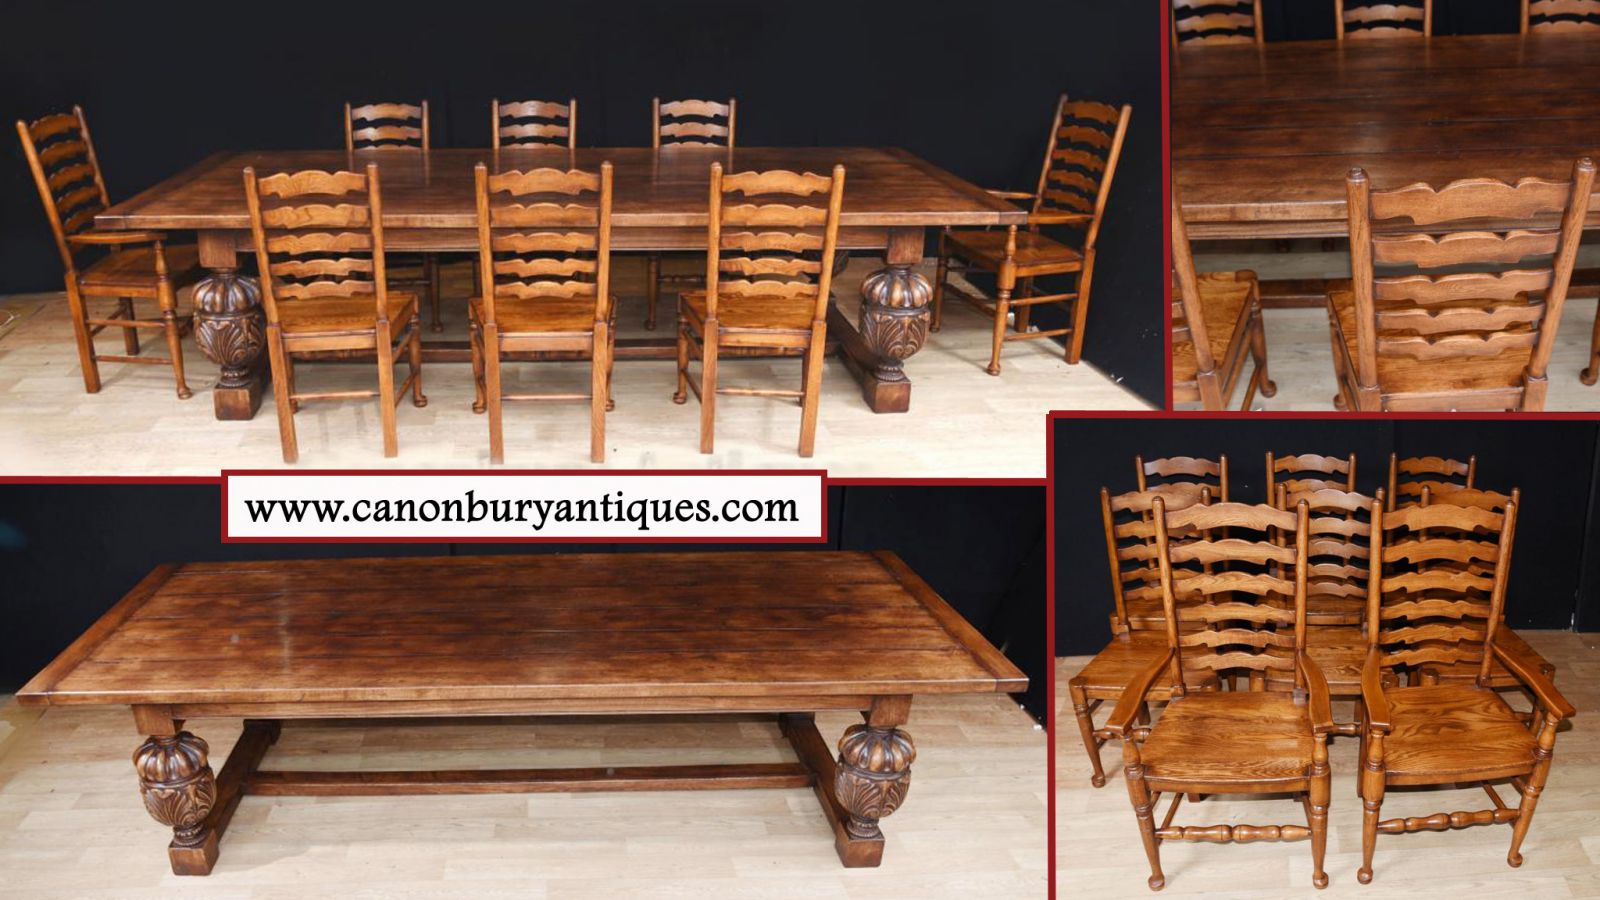 Set ladderbacks around a large oak refectory table